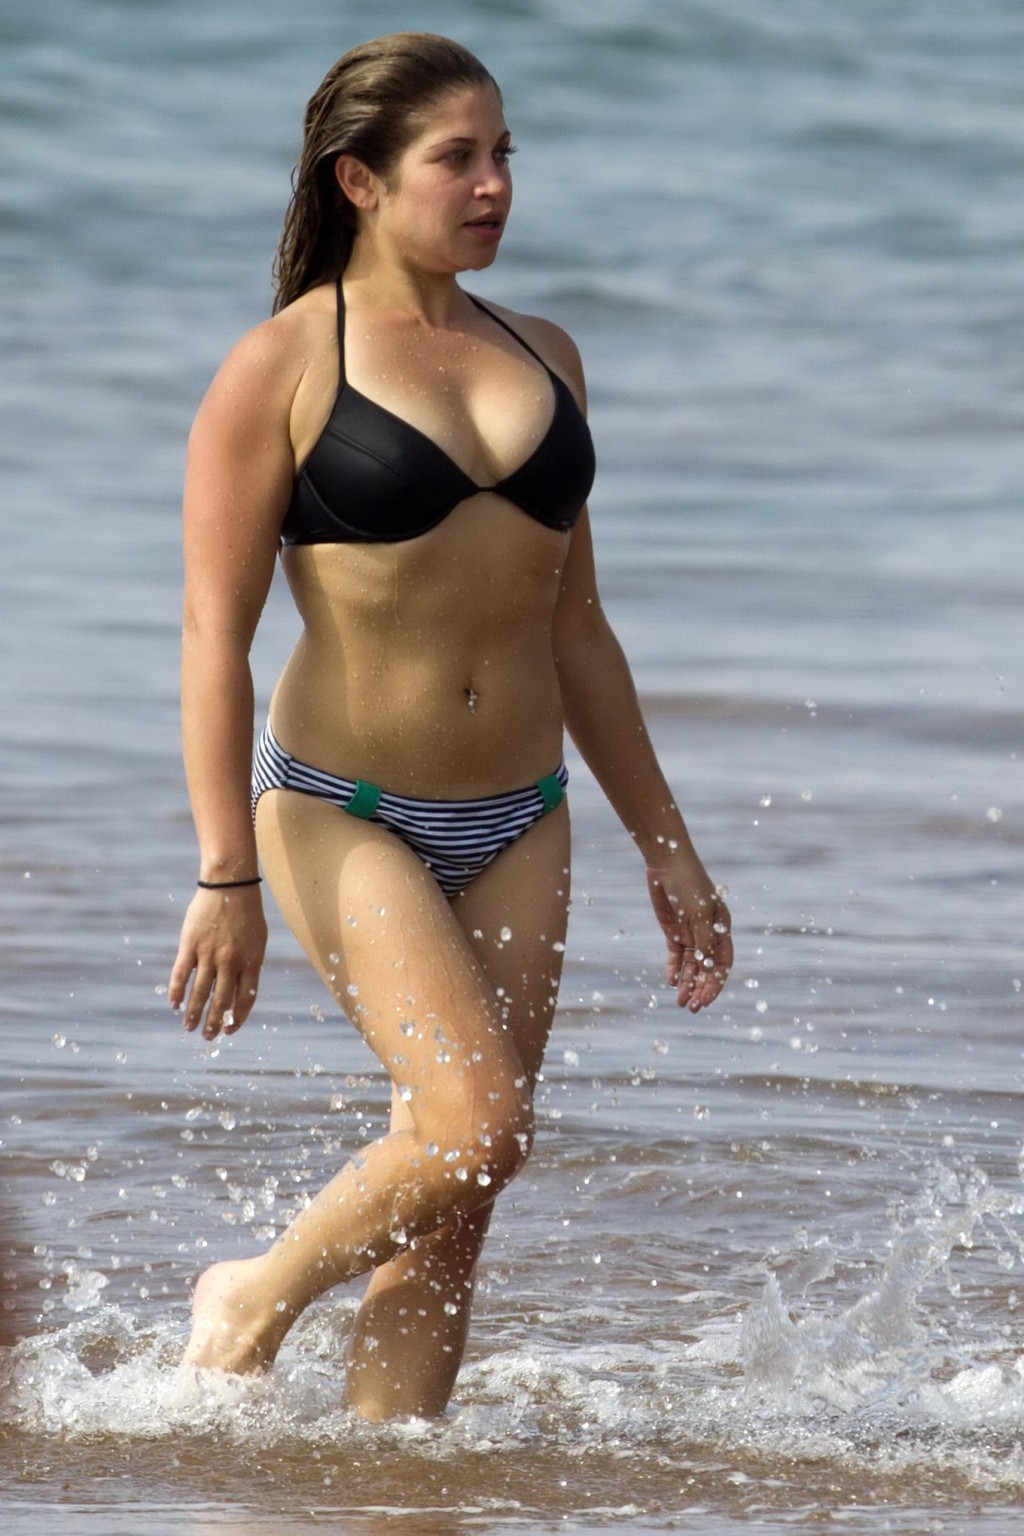 Danielle Fishel showing off her plump bikini body on a beach in Hawaii #75214674